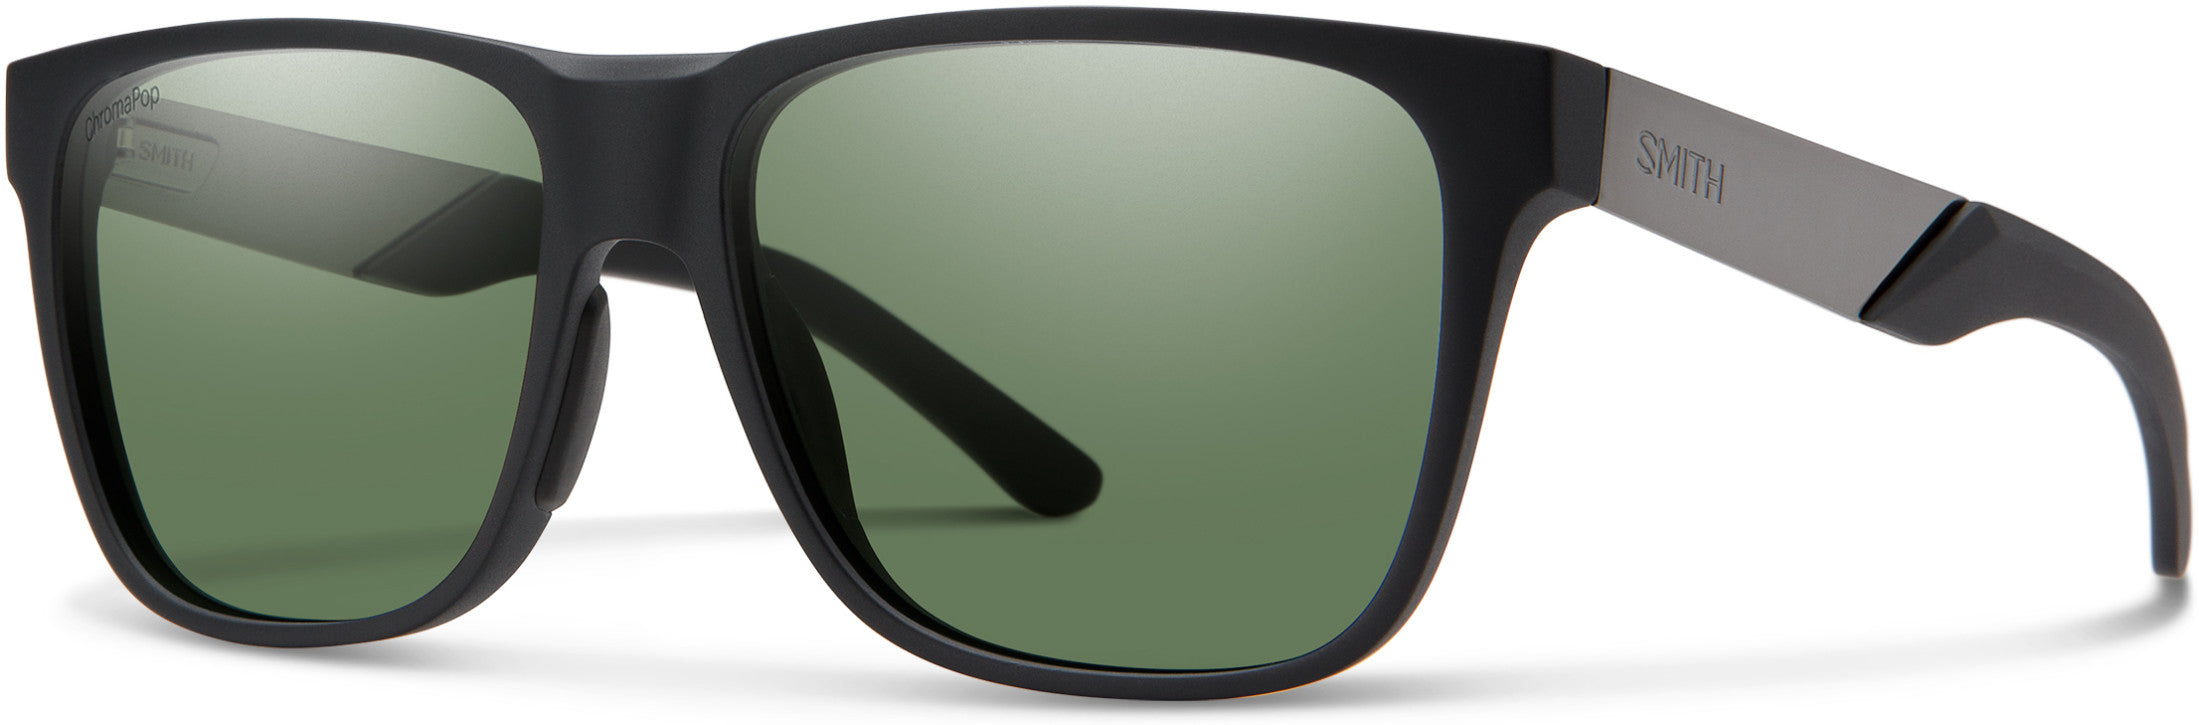 Smith Lowdown Steel Rectangular Sunglasses 0TI7-0TI7  Ruthenium Matte Black (L7 Polarized Green CP)